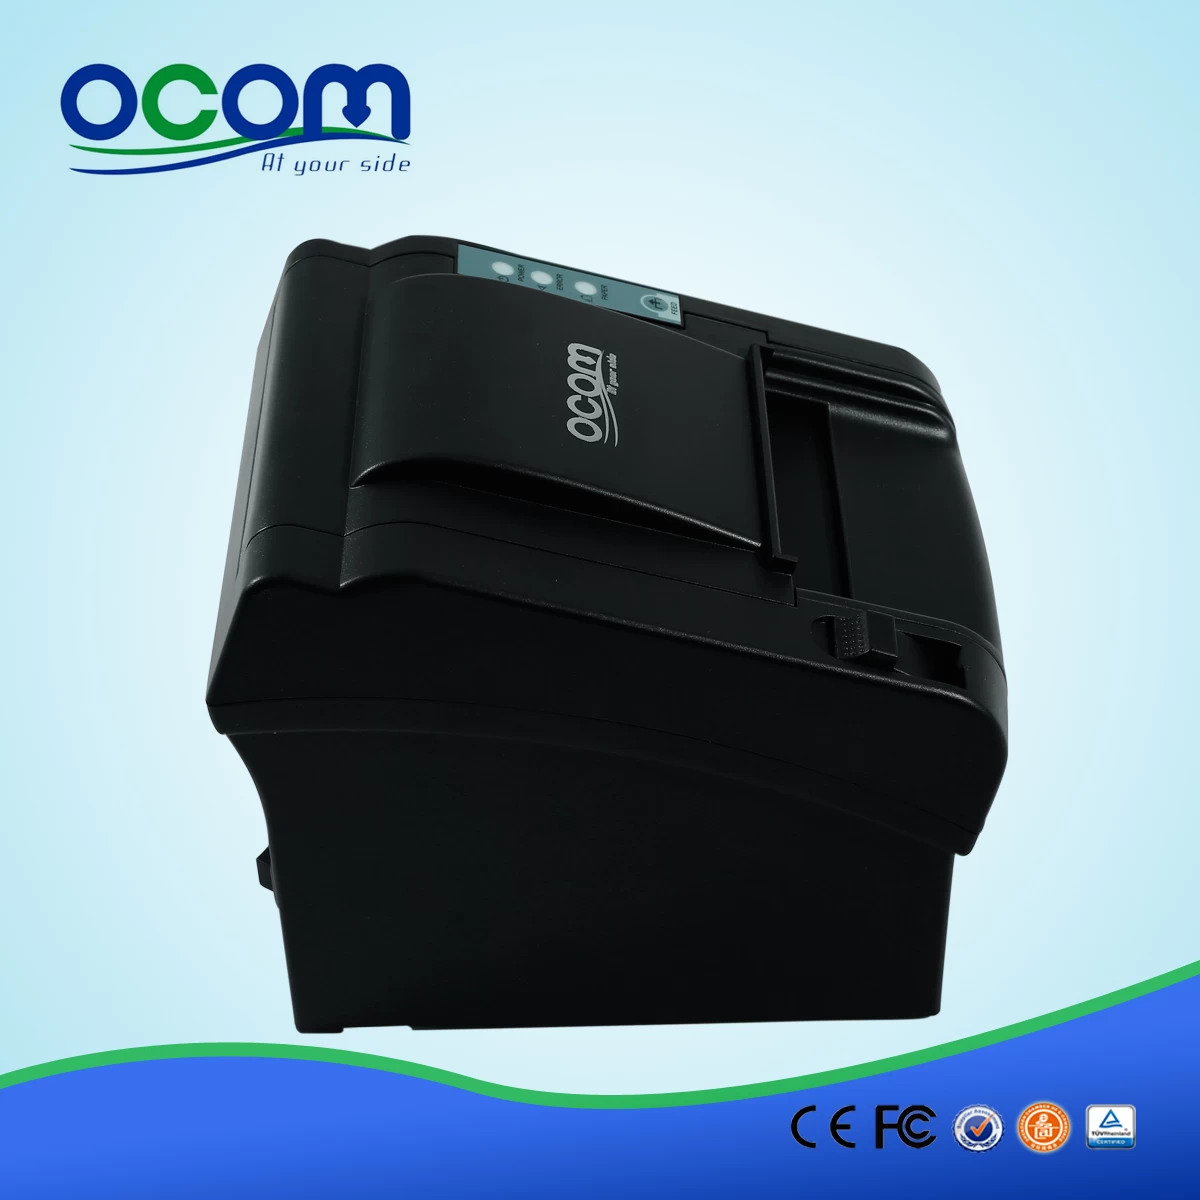 OCPP-802: factory supply pos thermal printer 80mm, thermal paper printer